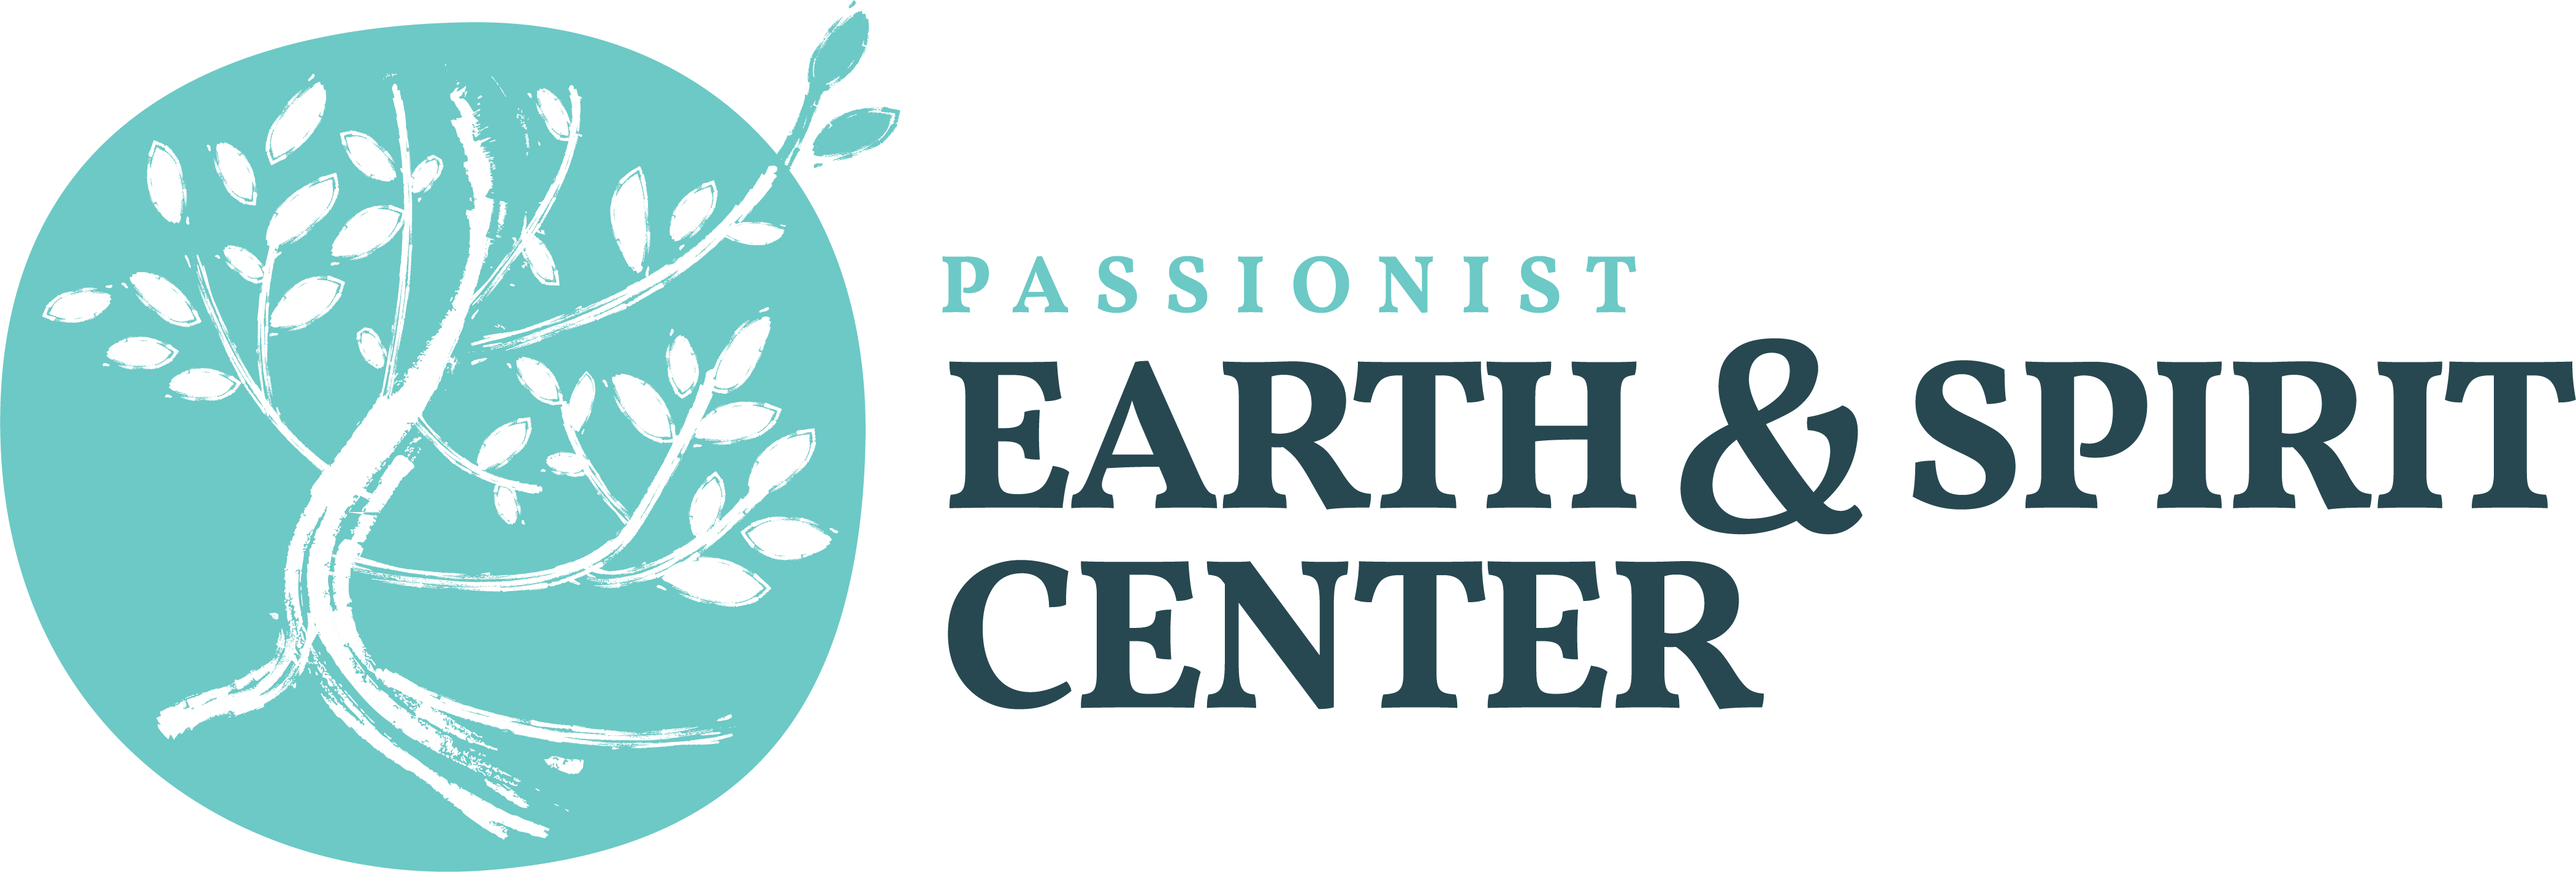 Passionist Earth & Spirit Center